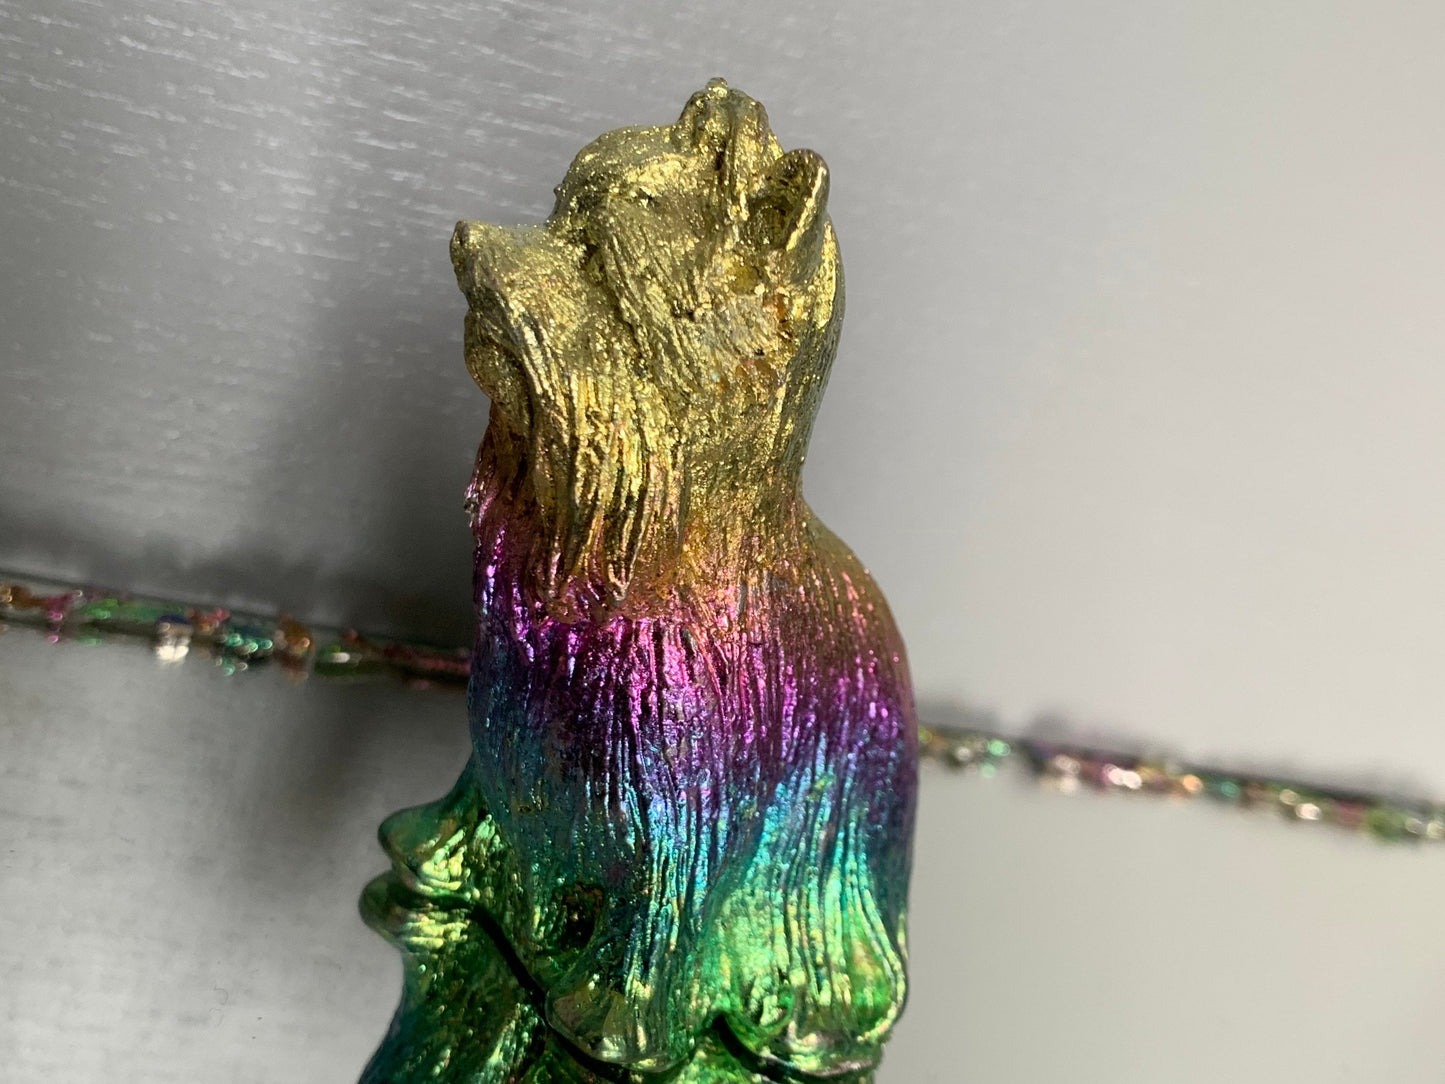 Rainbow Bismuth Crystal Yorkshire Terrier Dog Metal Art Sculpture